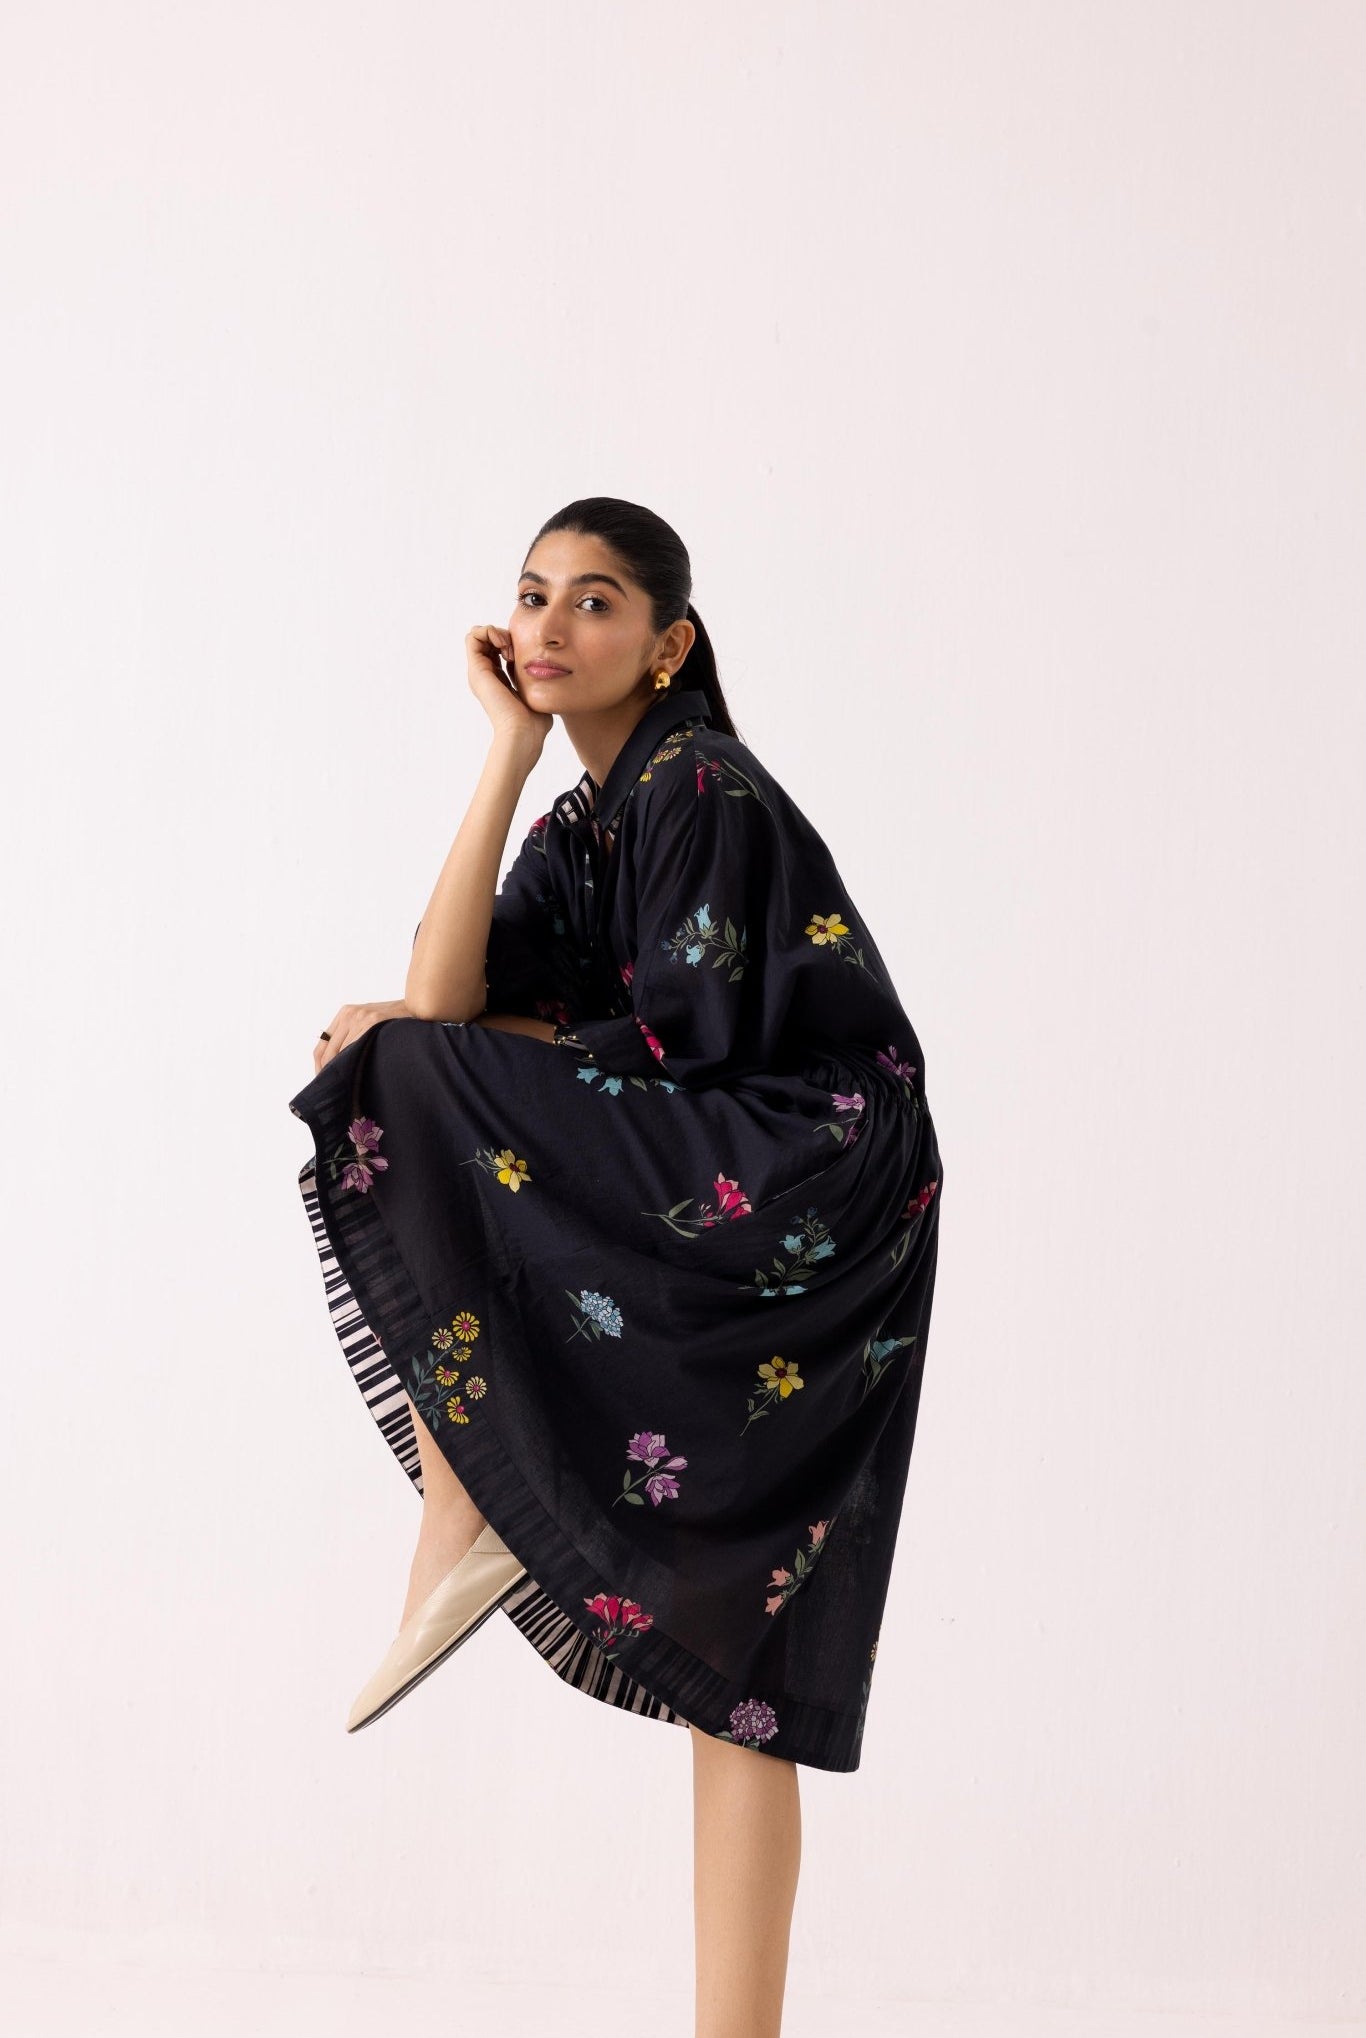 Zinnia Dress - CiceroniJacket, DressLabel Shreya Sharma